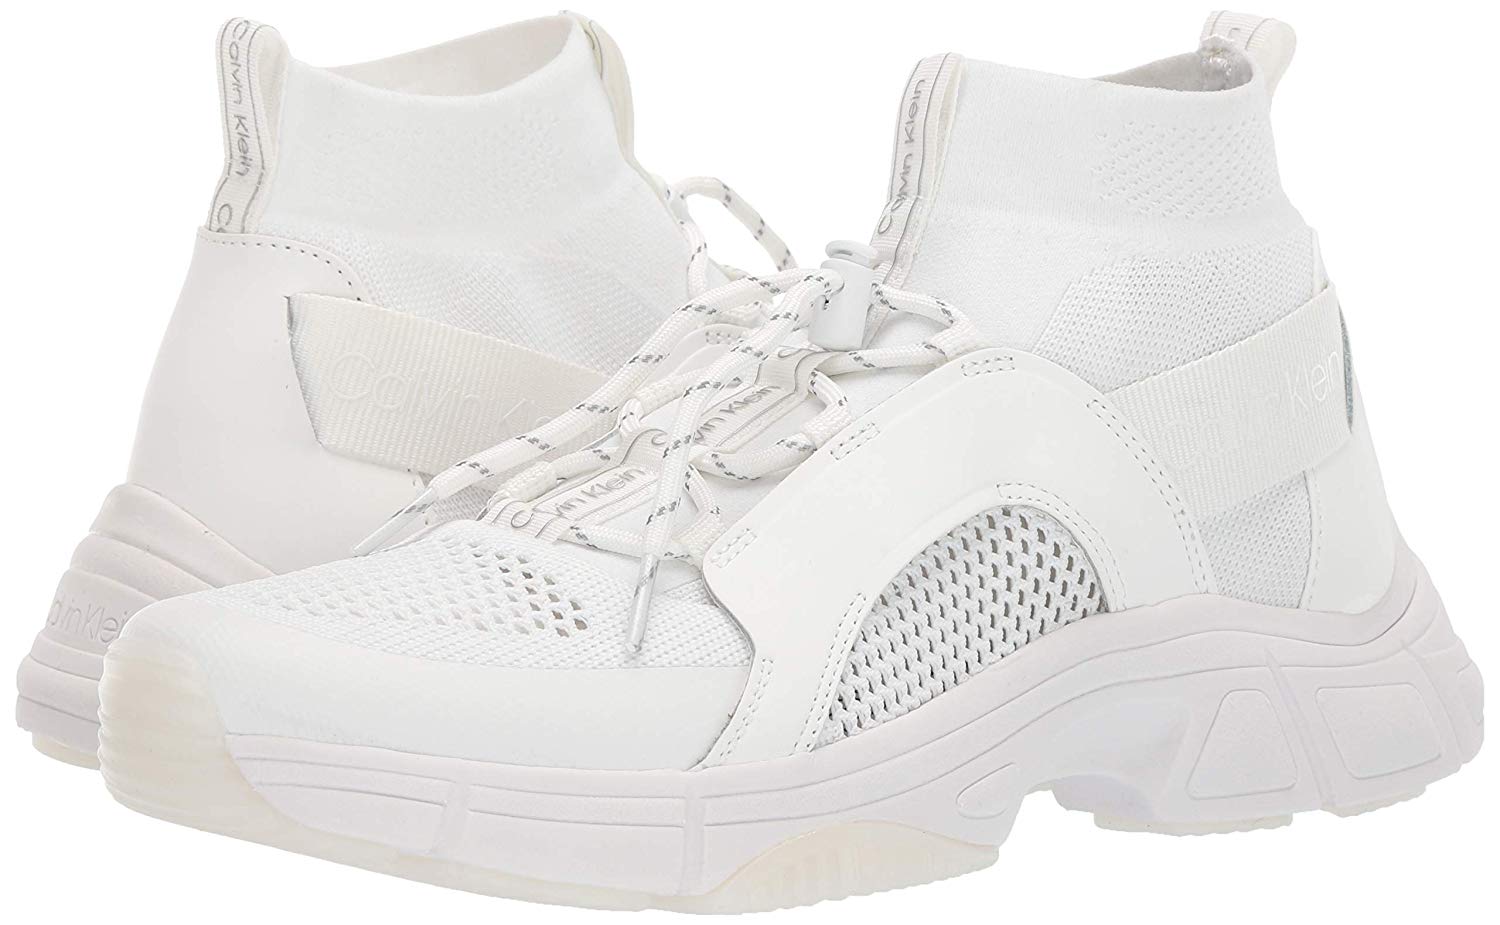 Delton Sneaker, White, Size 11.0 3e1A 